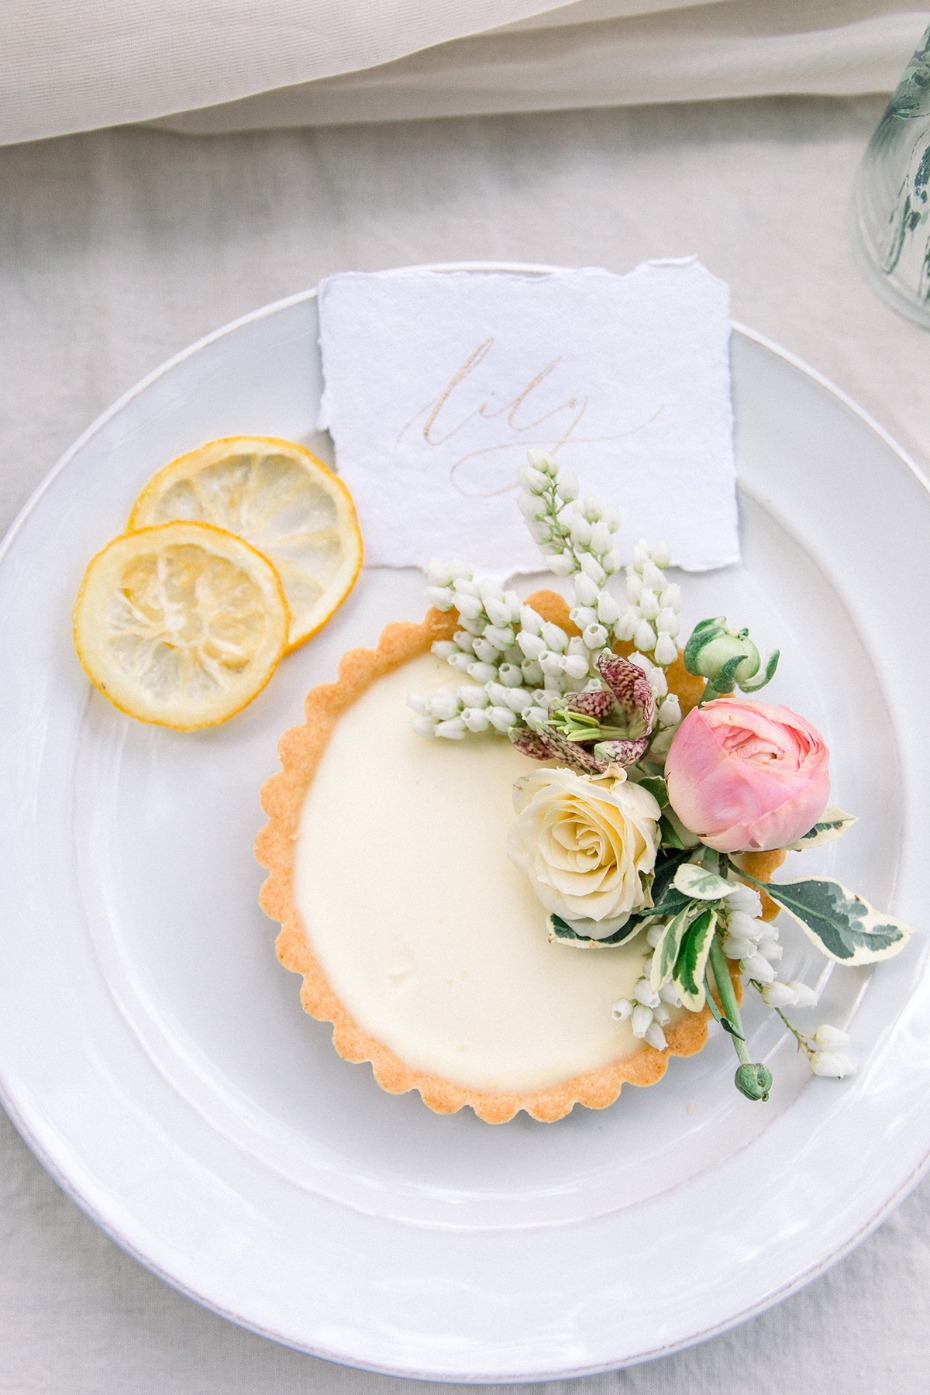 Lemon tart place card for a wedding